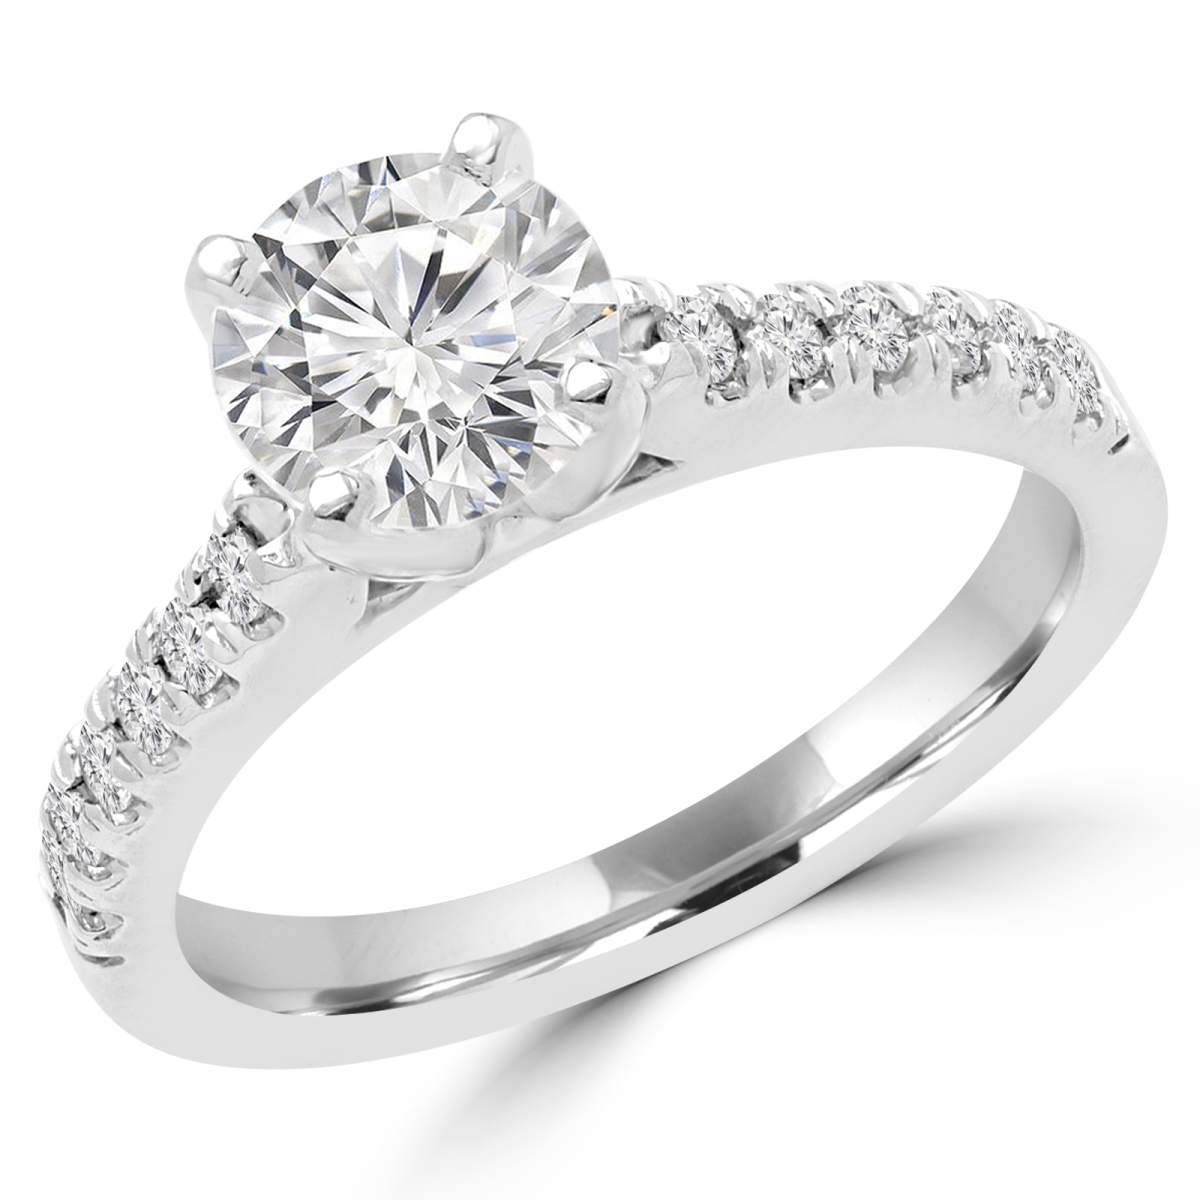 MD160214-3.5 0.8 CTW Multi-Stone Round Diamond Engagement Ring in 14K White Gold - Size 3.5 -  Majesty Diamonds